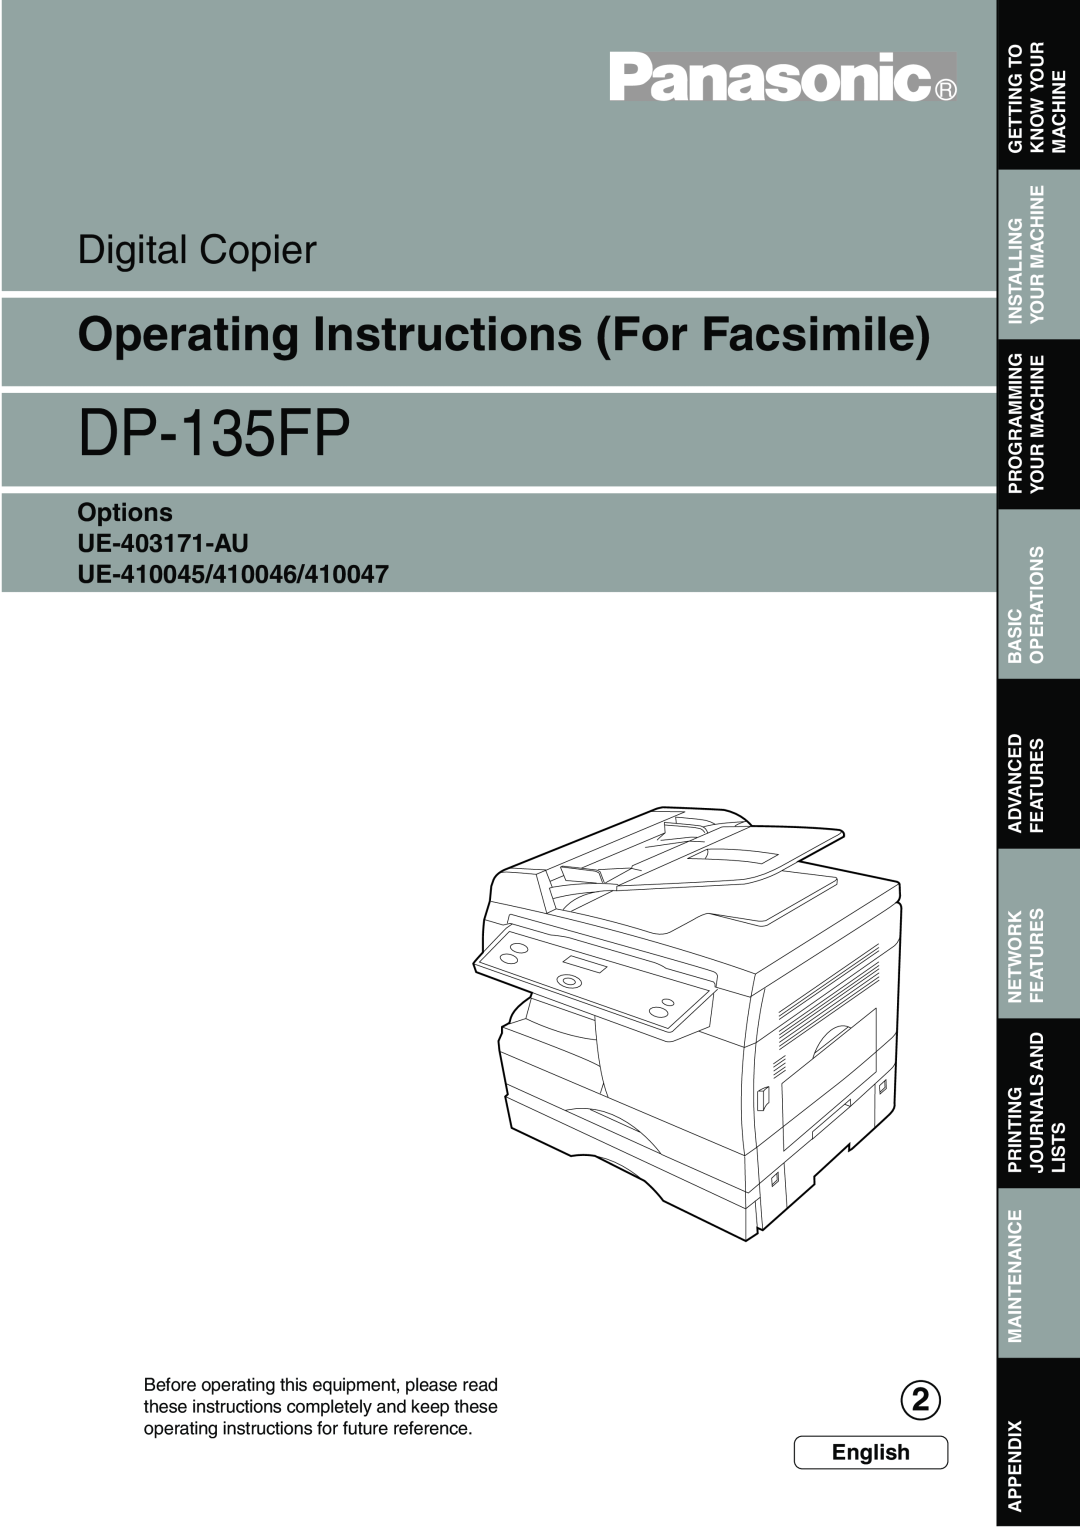 Panasonic DP-135FP appendix Options UE-403171-AU UE-410045/410046/410047, English, Operating Instructions For Facsimile 